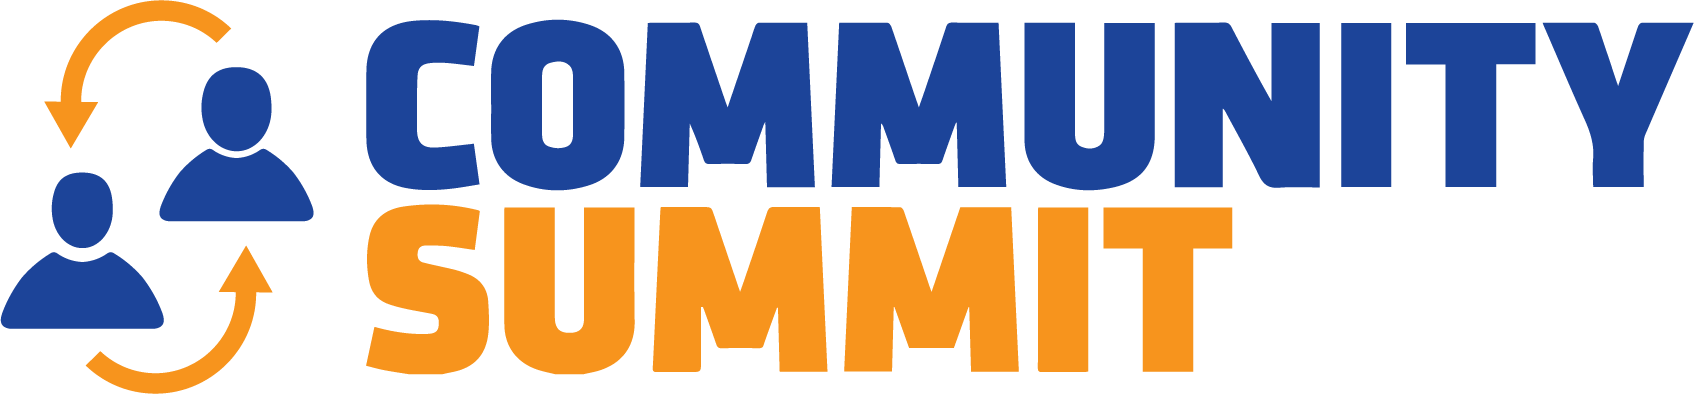 Community summit logo